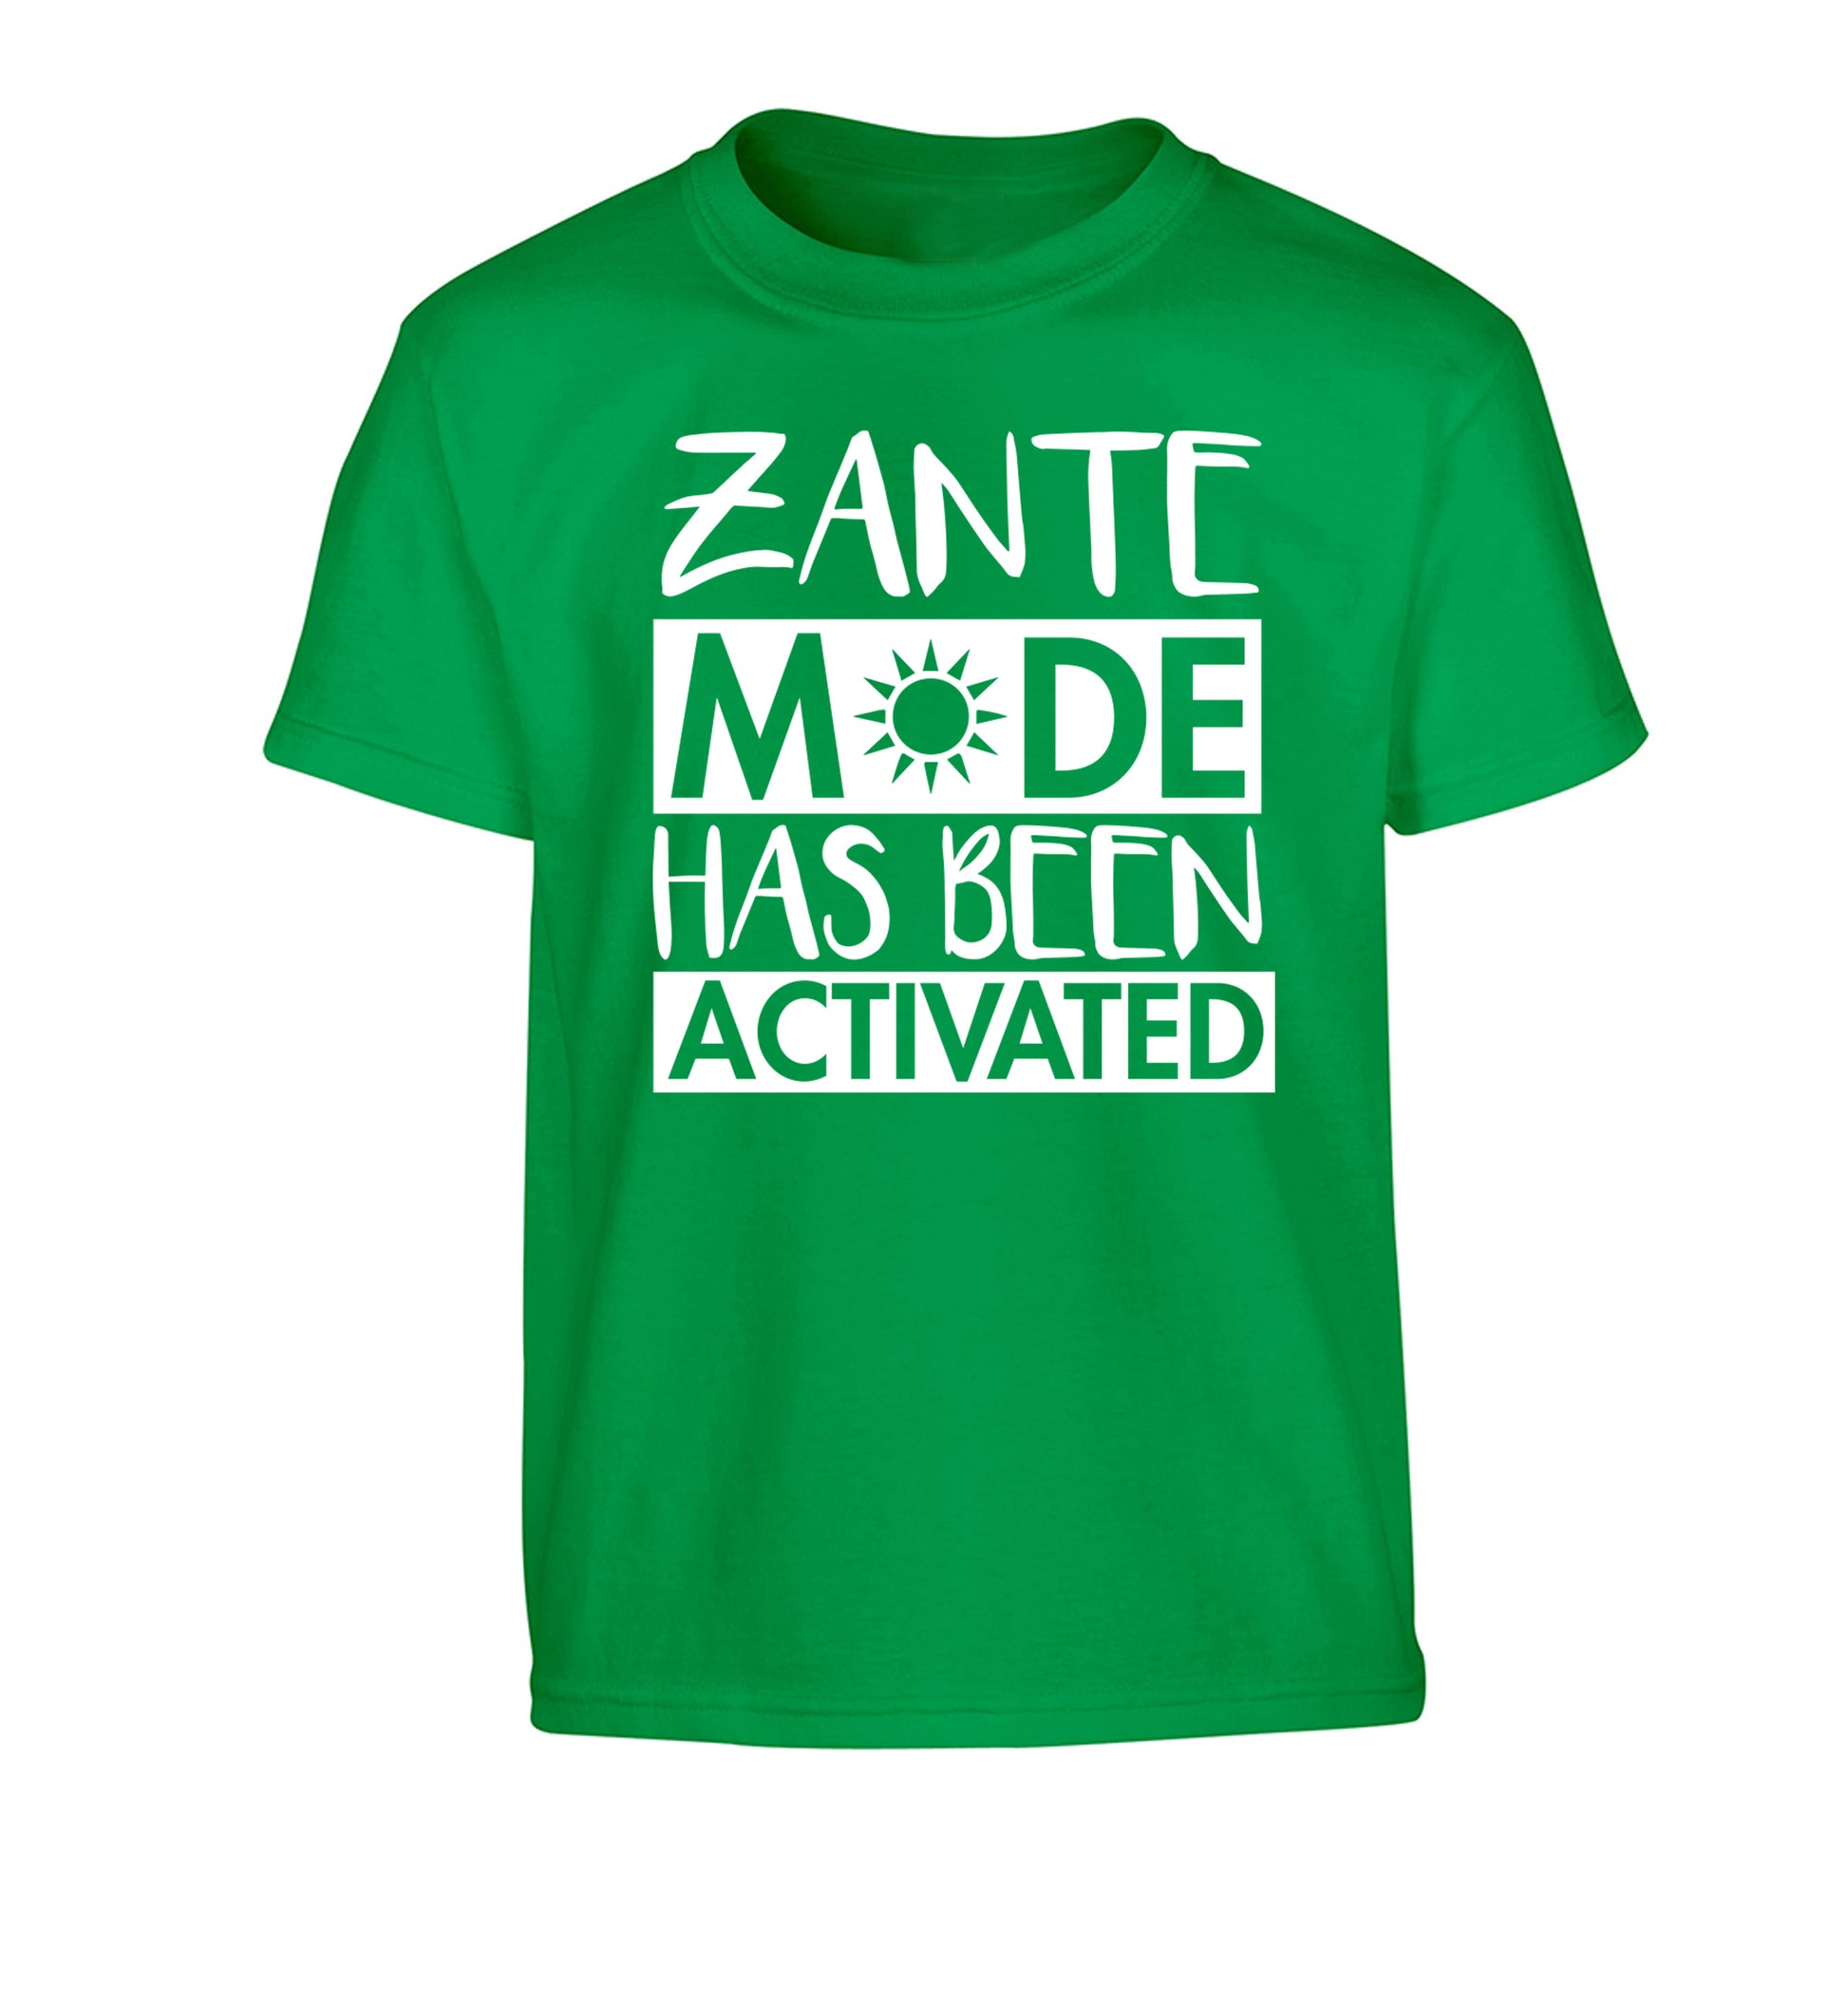 Zante mode has been activated Children's green Tshirt 12-13 Years